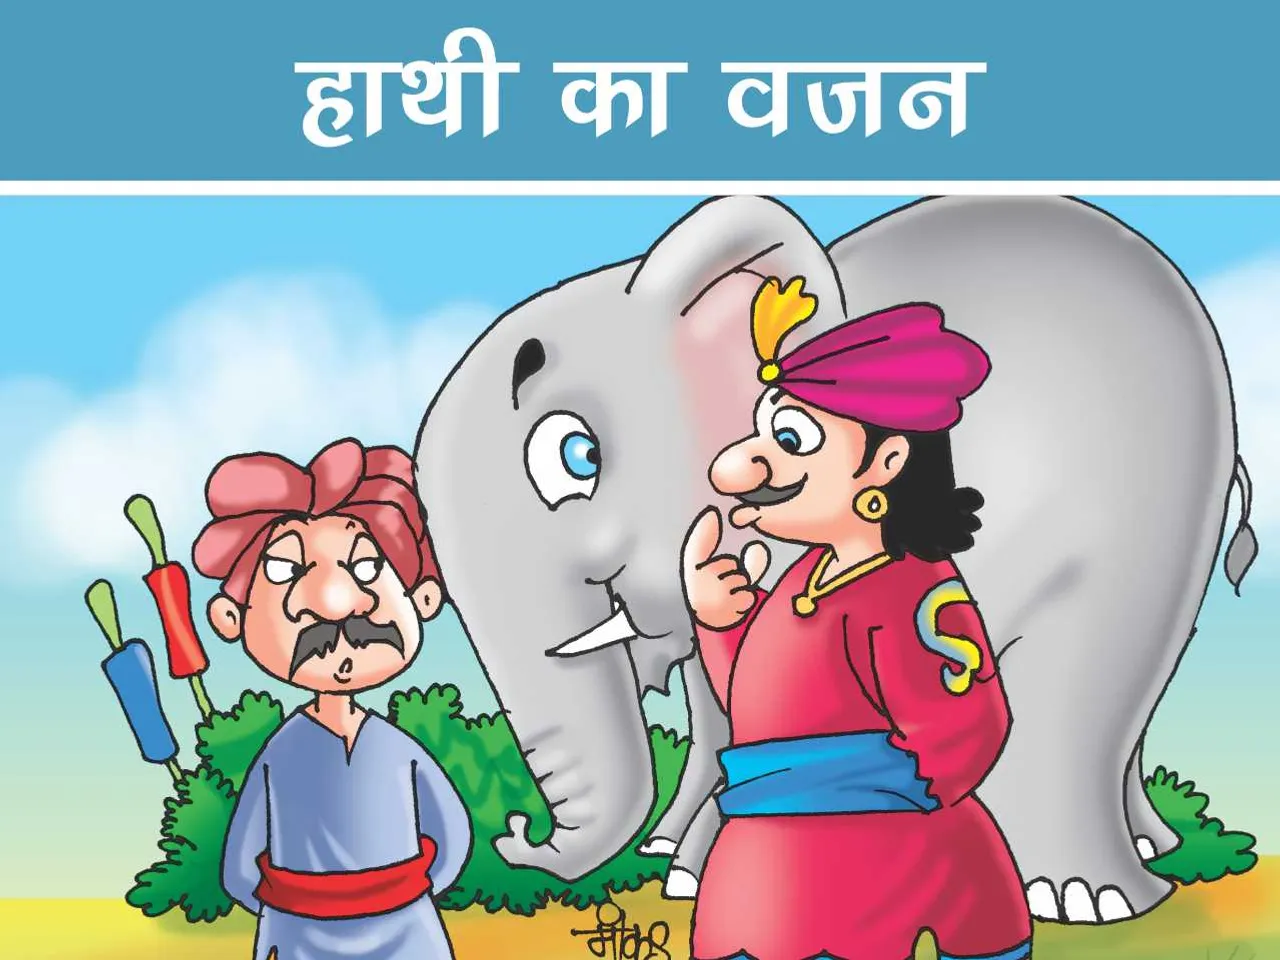 King and Elephant cartoon image